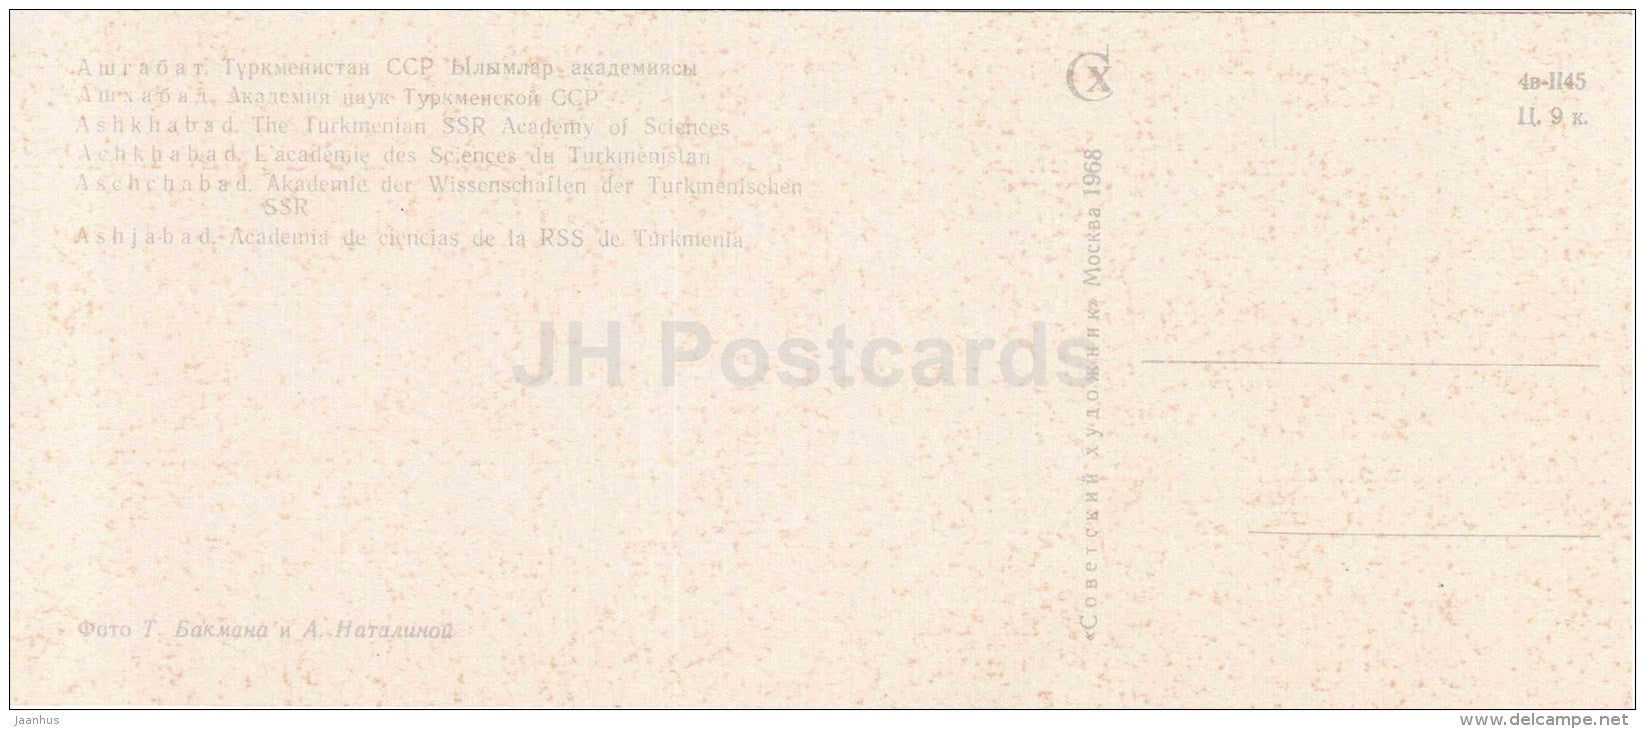 Academy of Sciences - Ashkhabad - Ashgabat - 1968 - Turkmenistan USSR - unused - JH Postcards